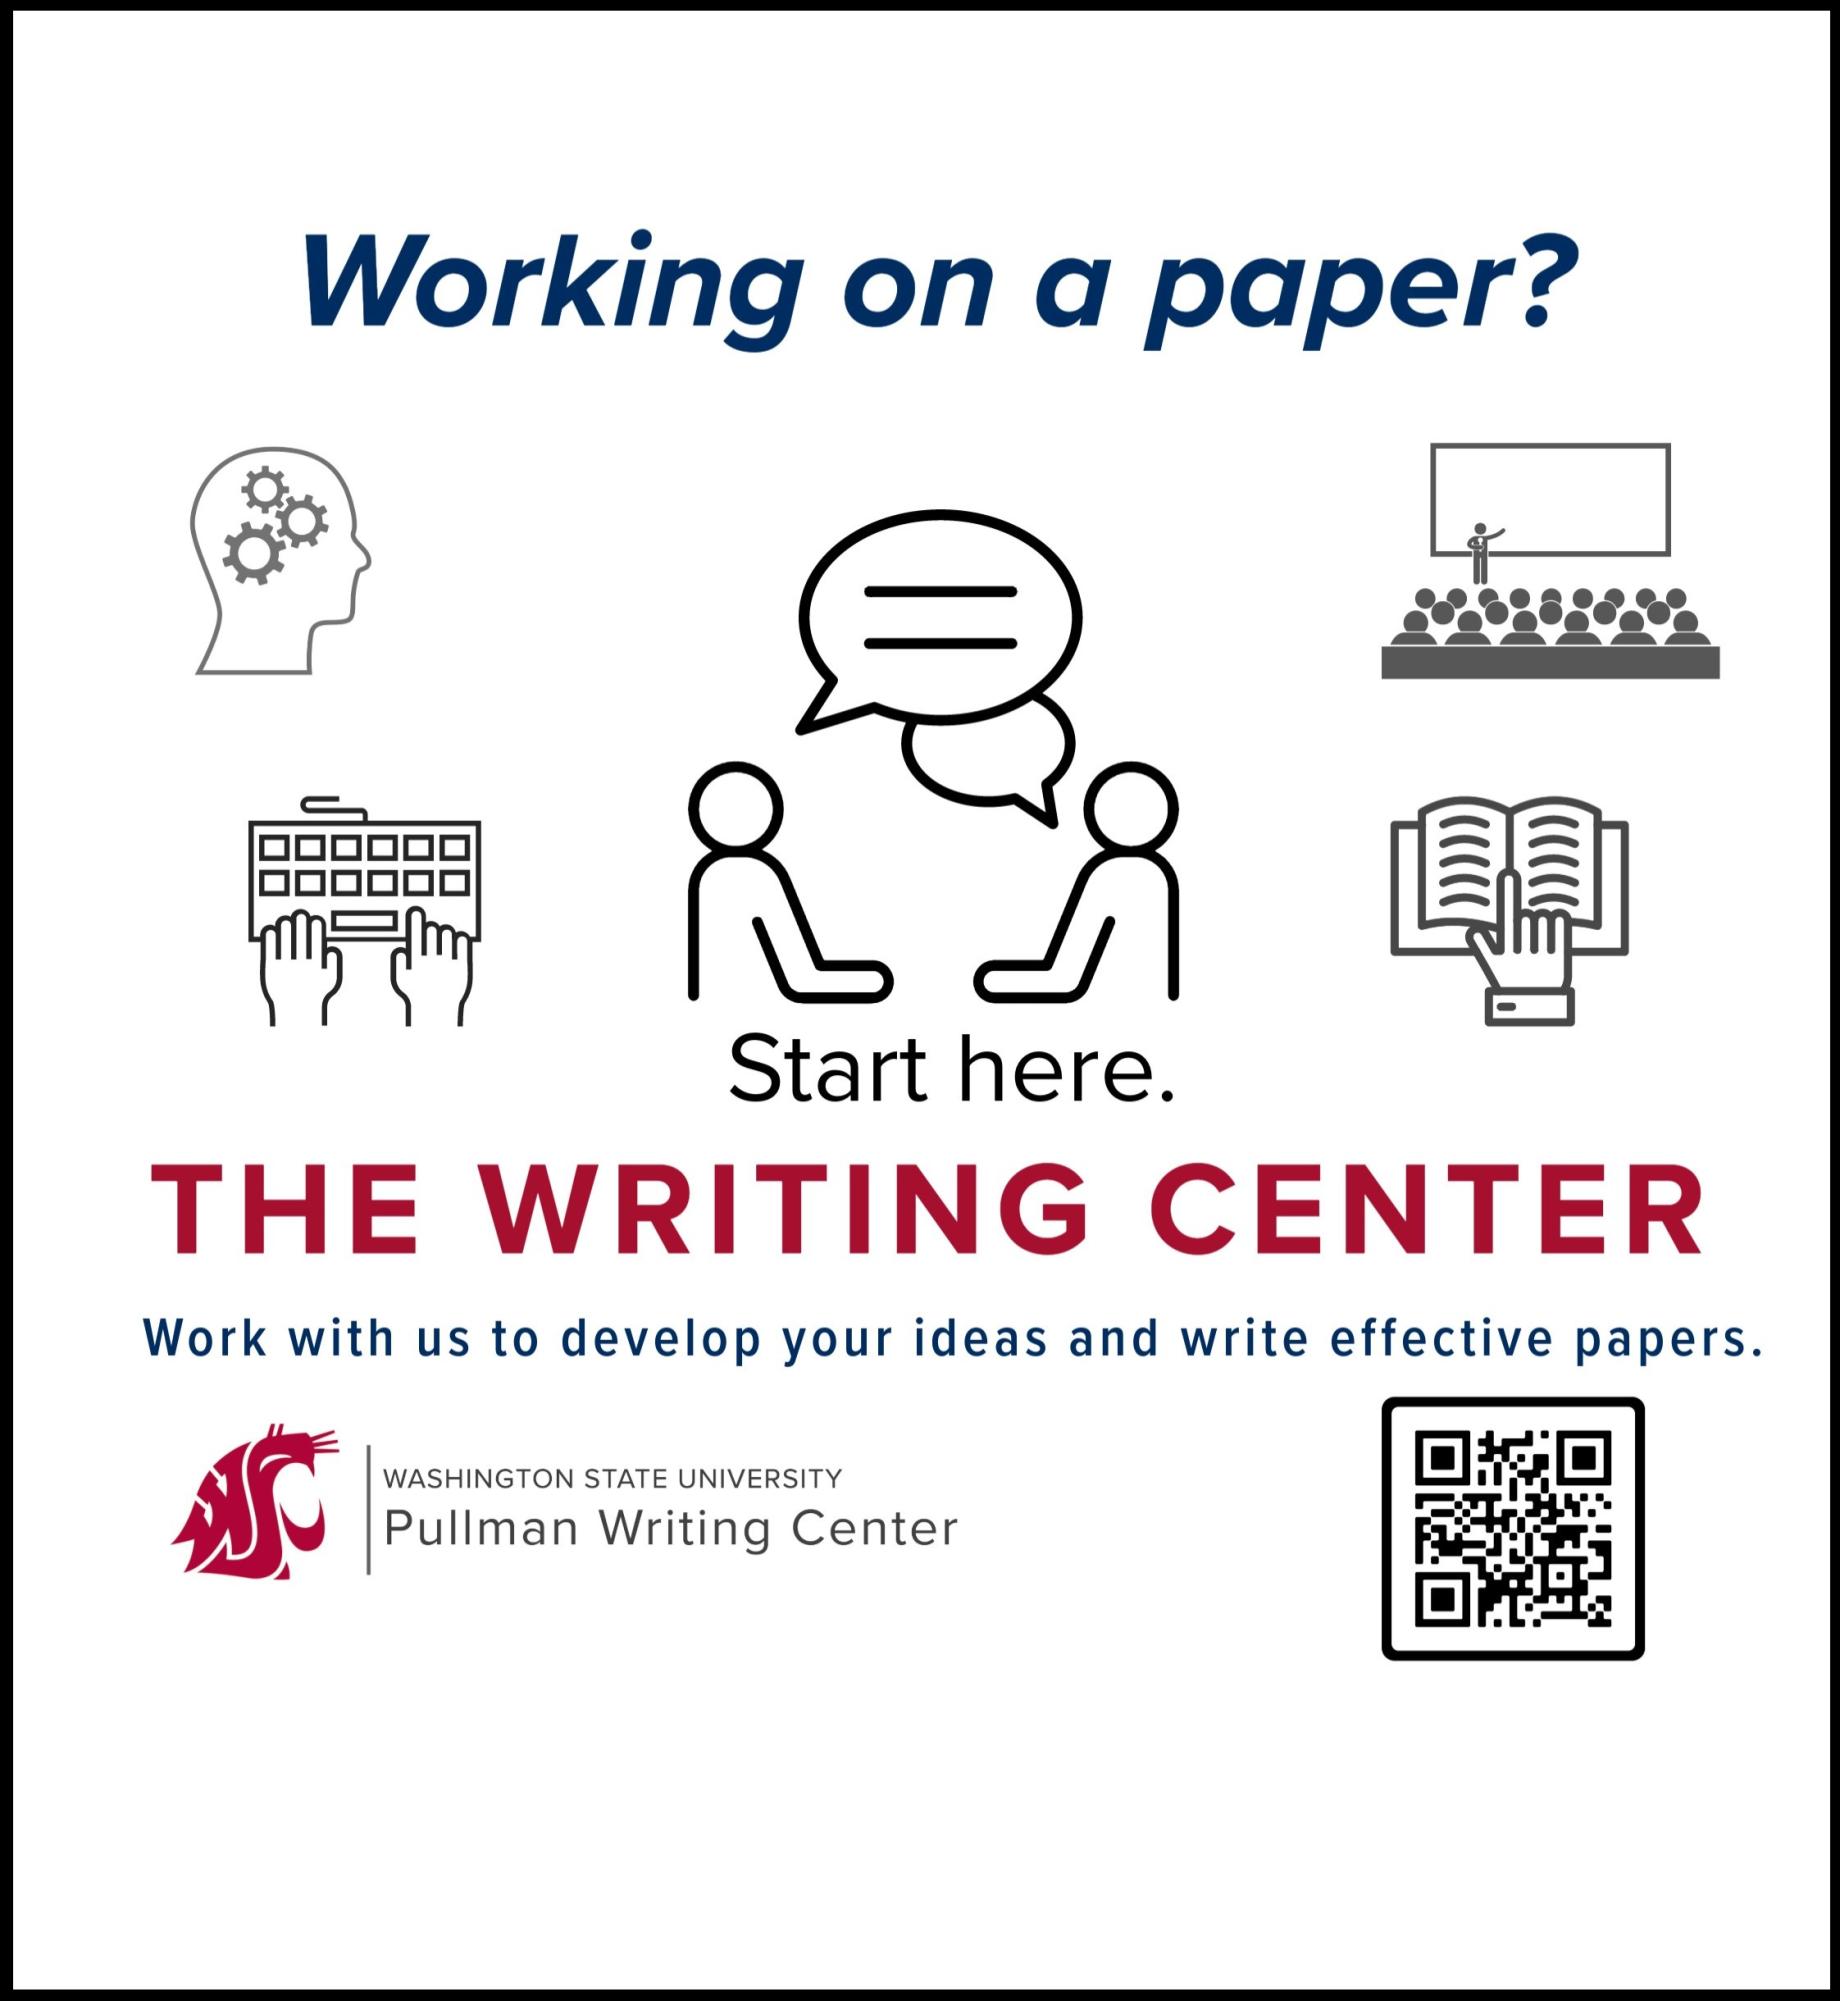 WSU Writing Center ad